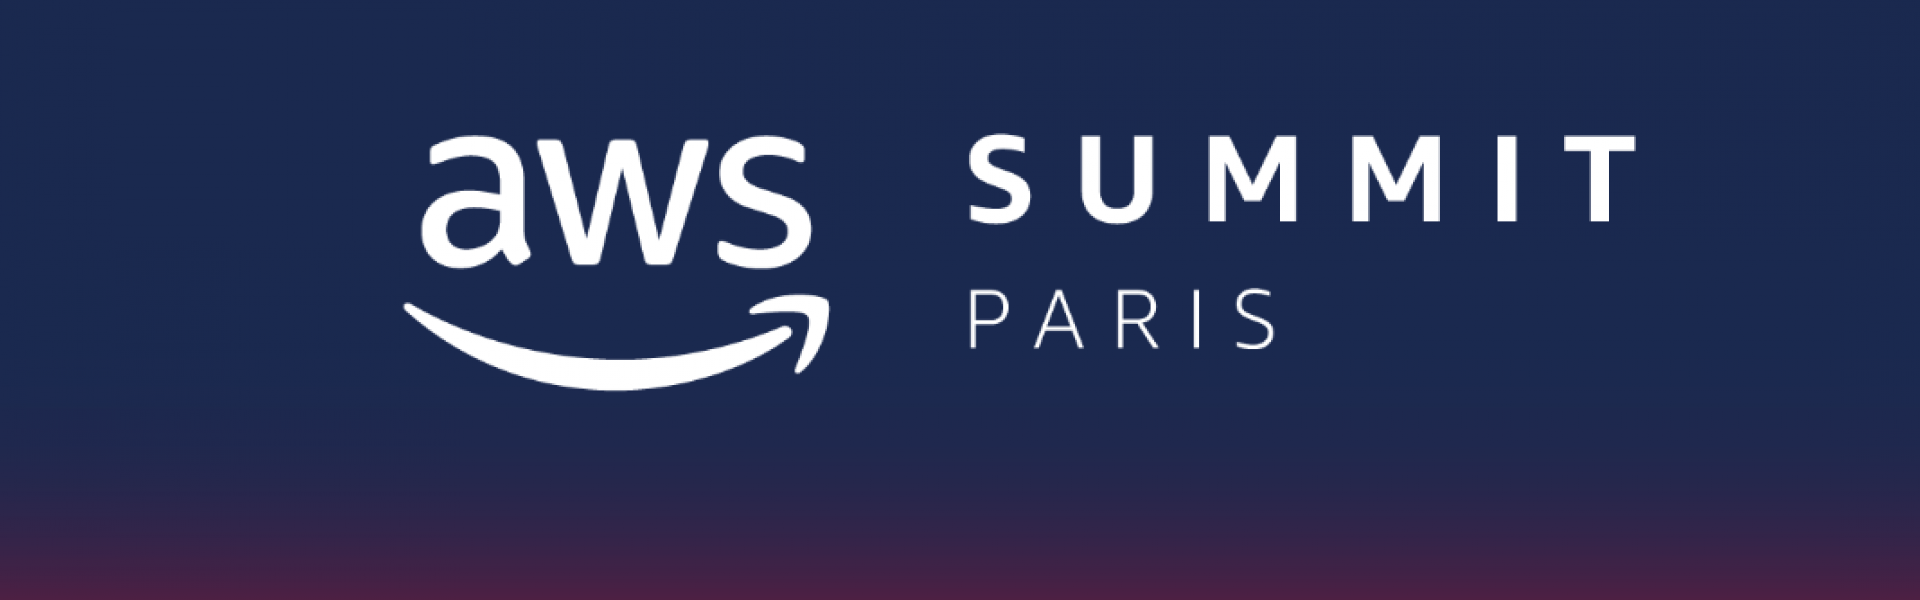 AWS Summit by Paris 